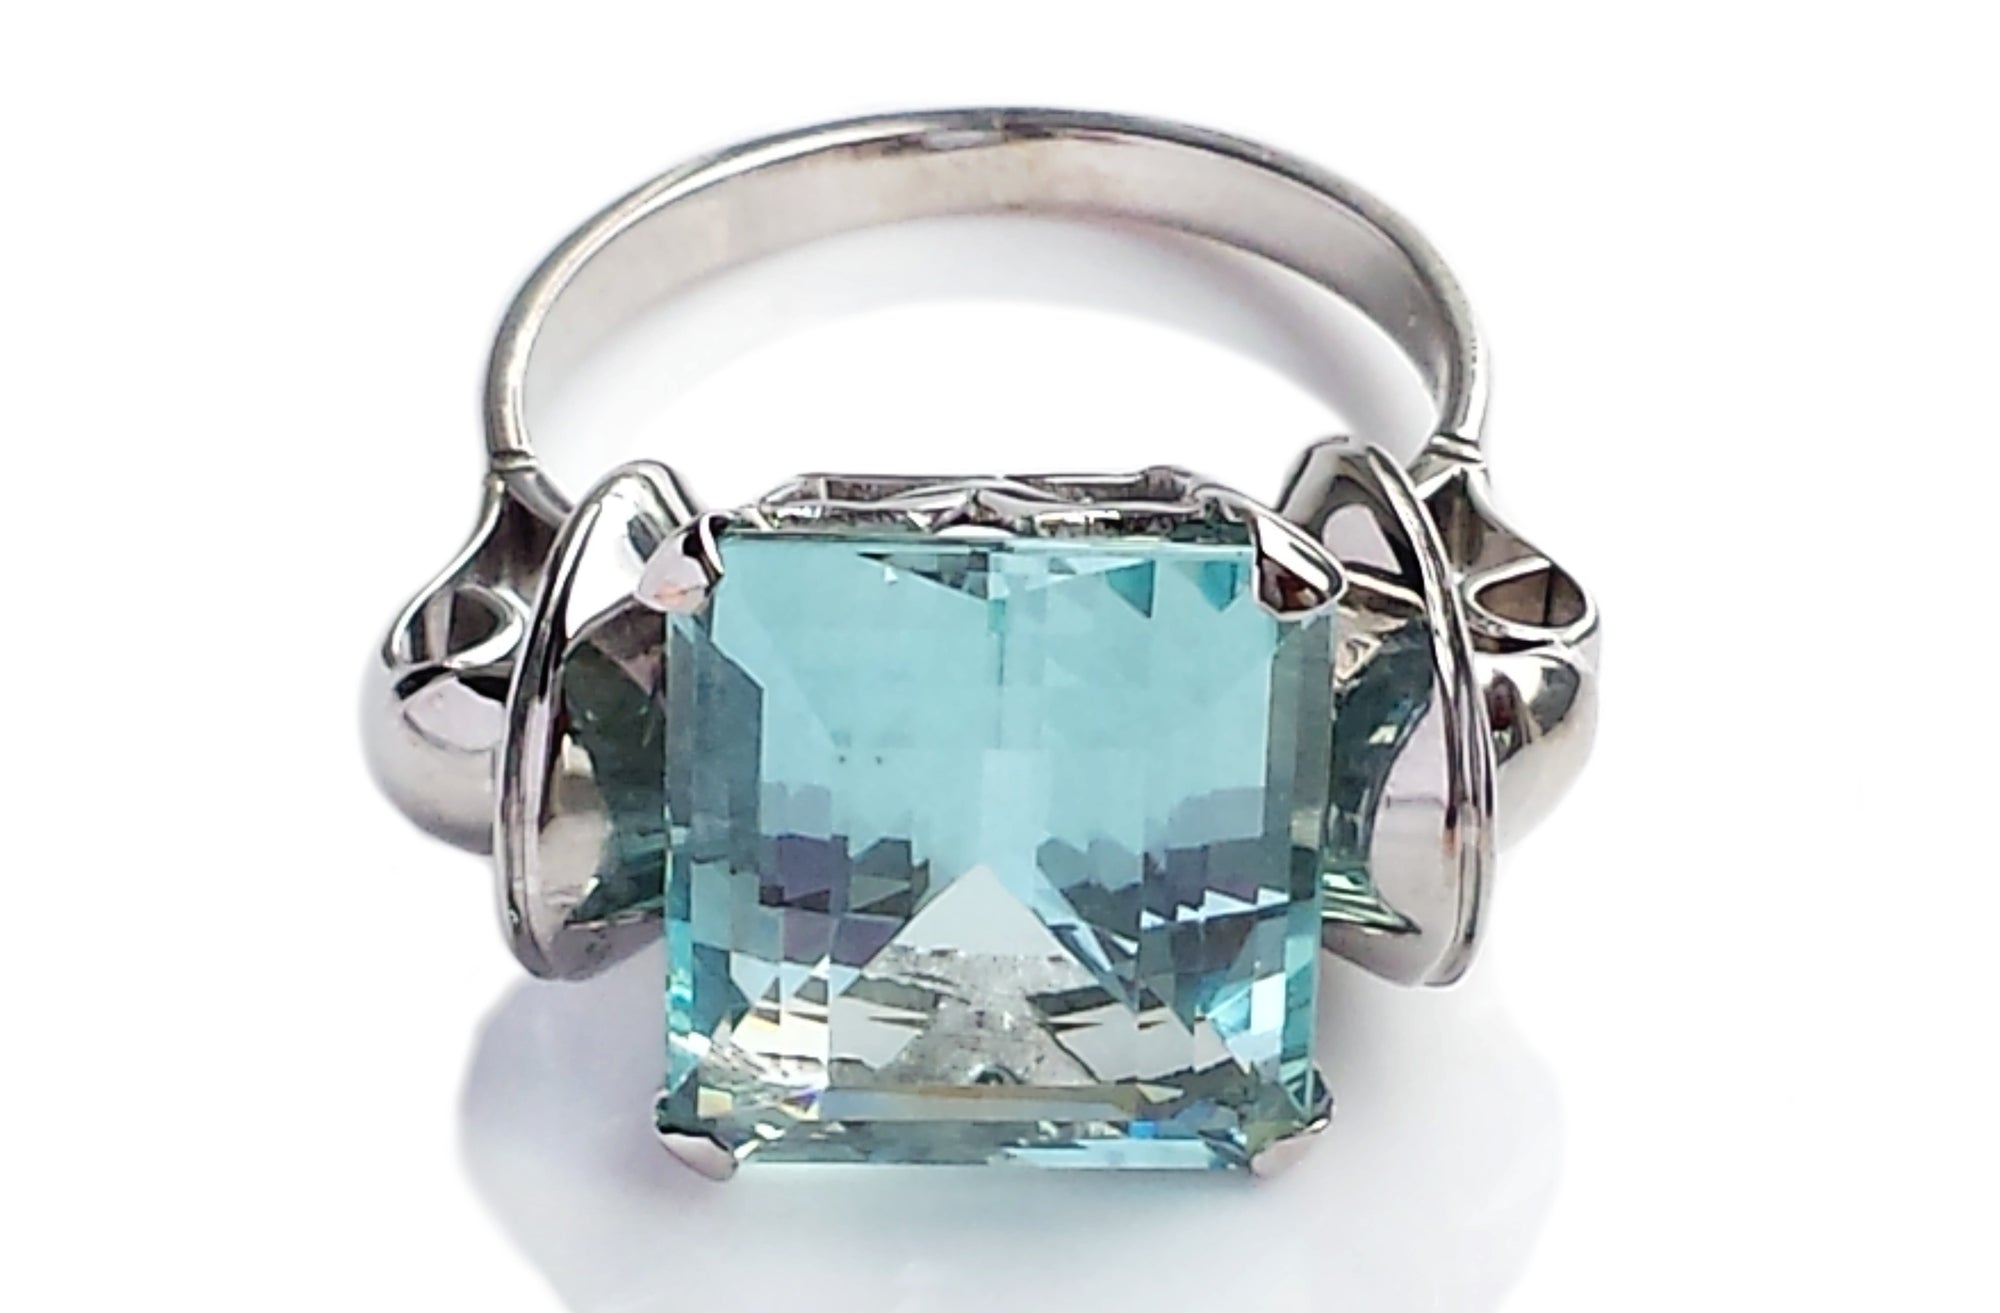 Vintage 1950s 9.0 carat Aquamarine Dress Ring